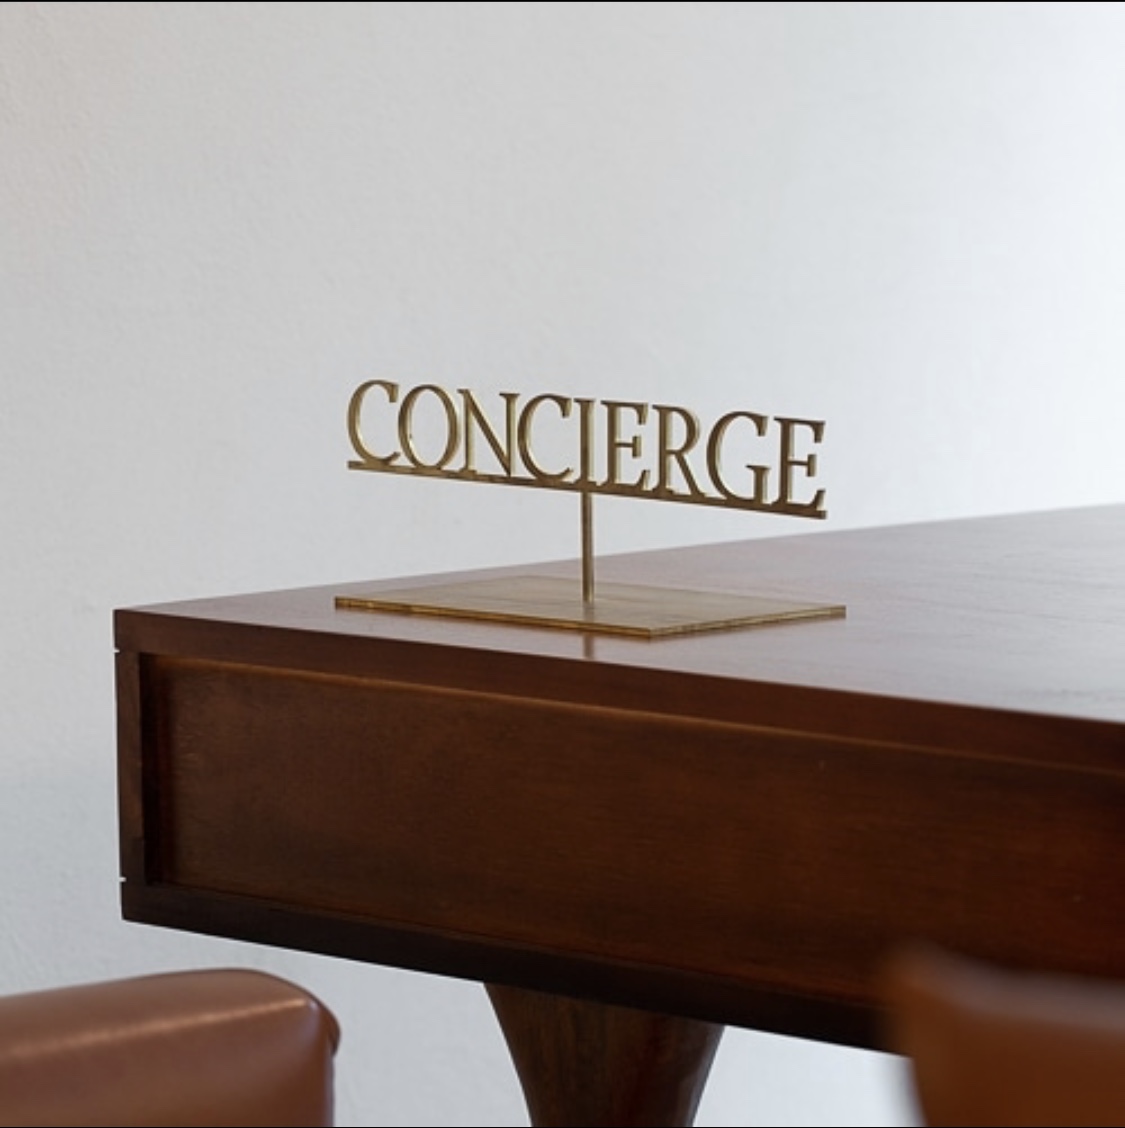 Masa İsimlik Concierge